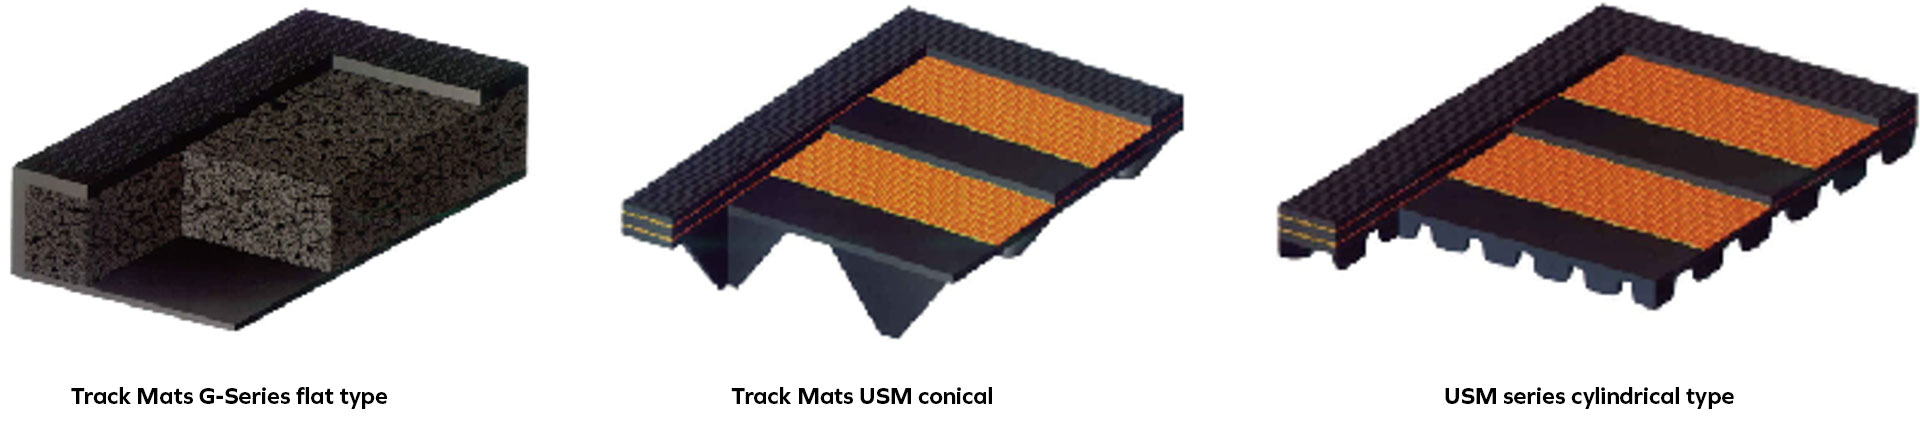 track-mats-technical